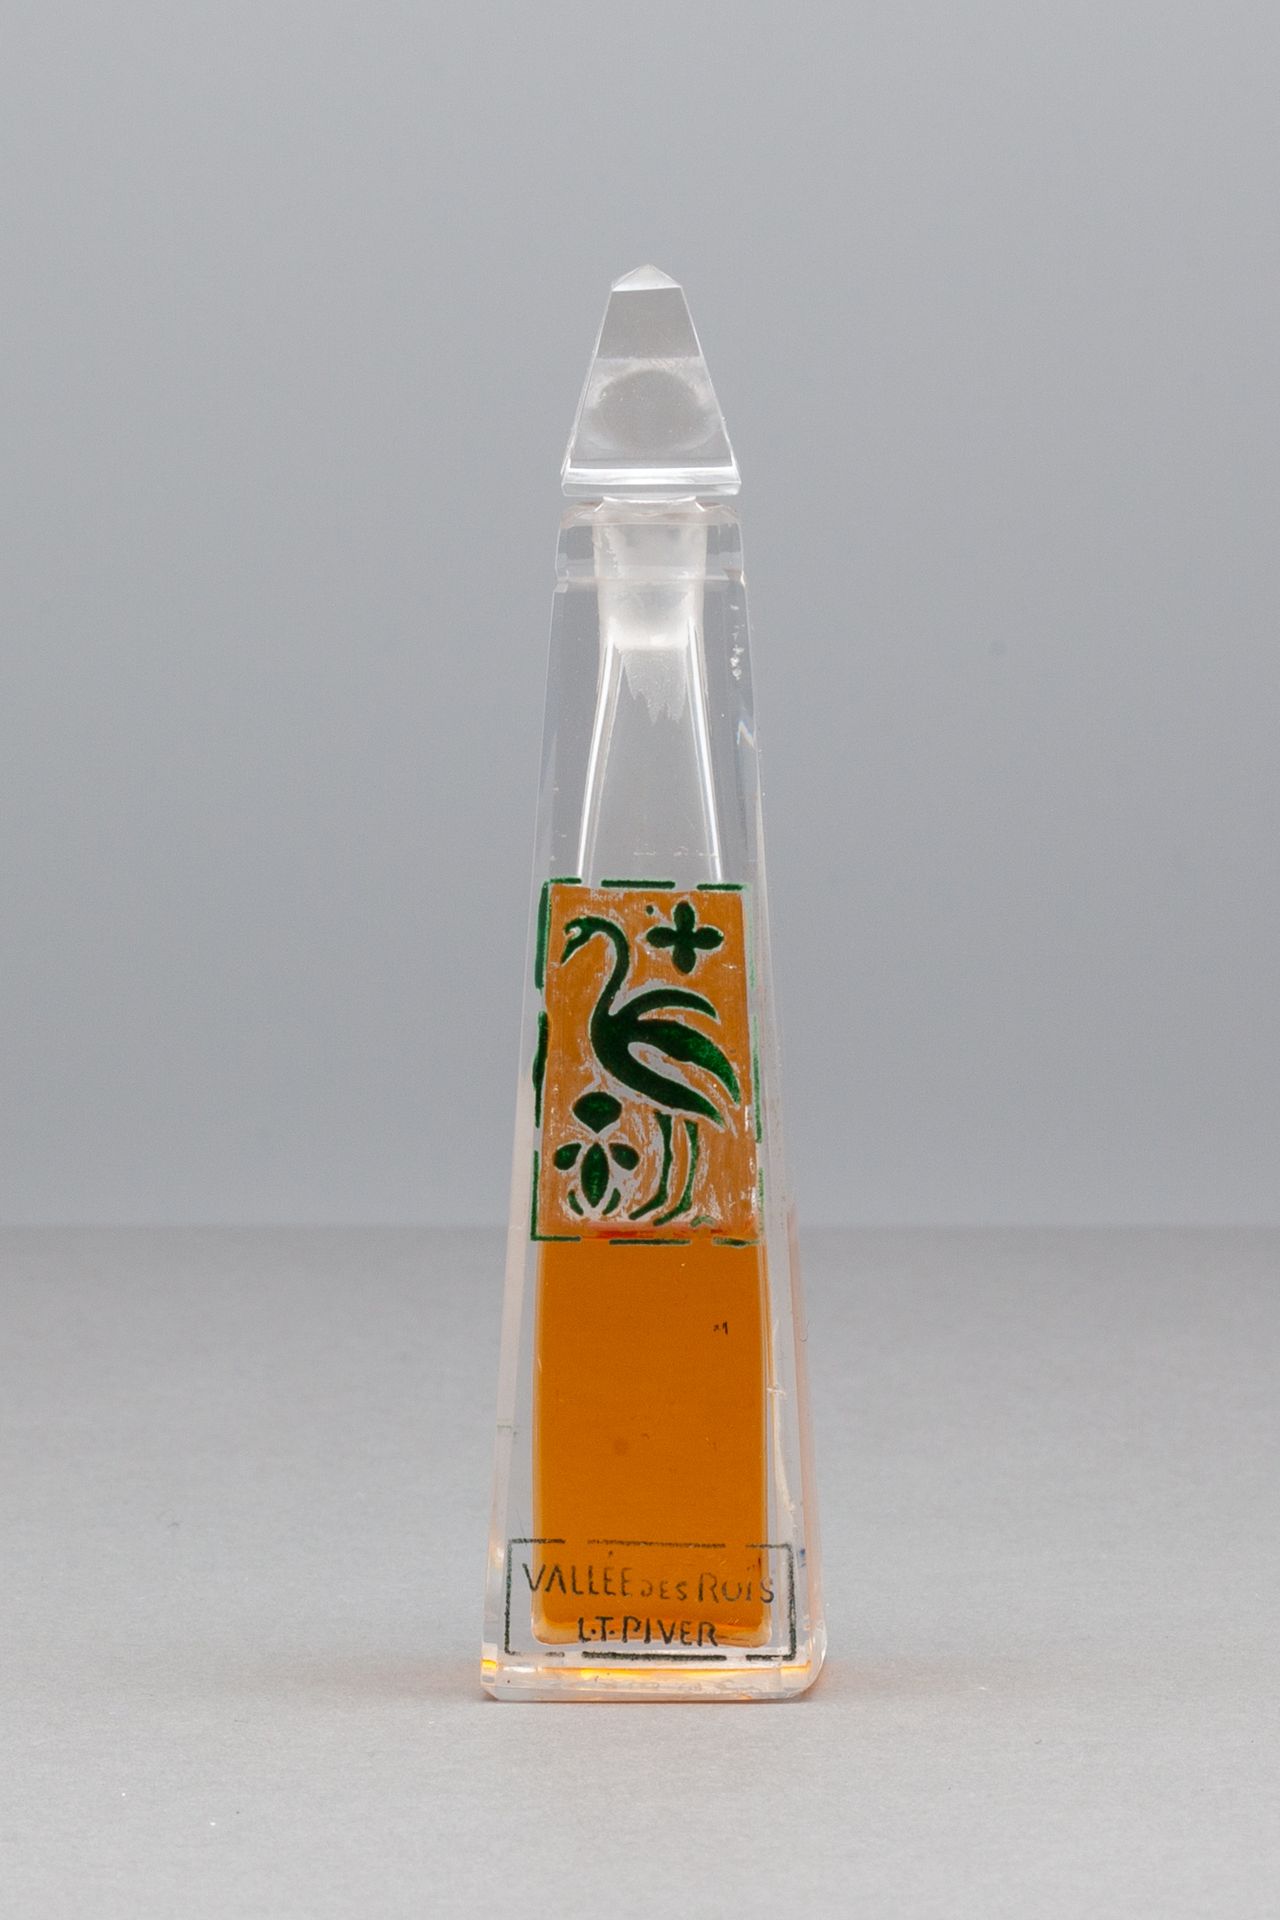 L.T.PIVER "LA VALLEE DES ROIS" Bottle in crystal of BACCARAT in the shape of obe&hellip;